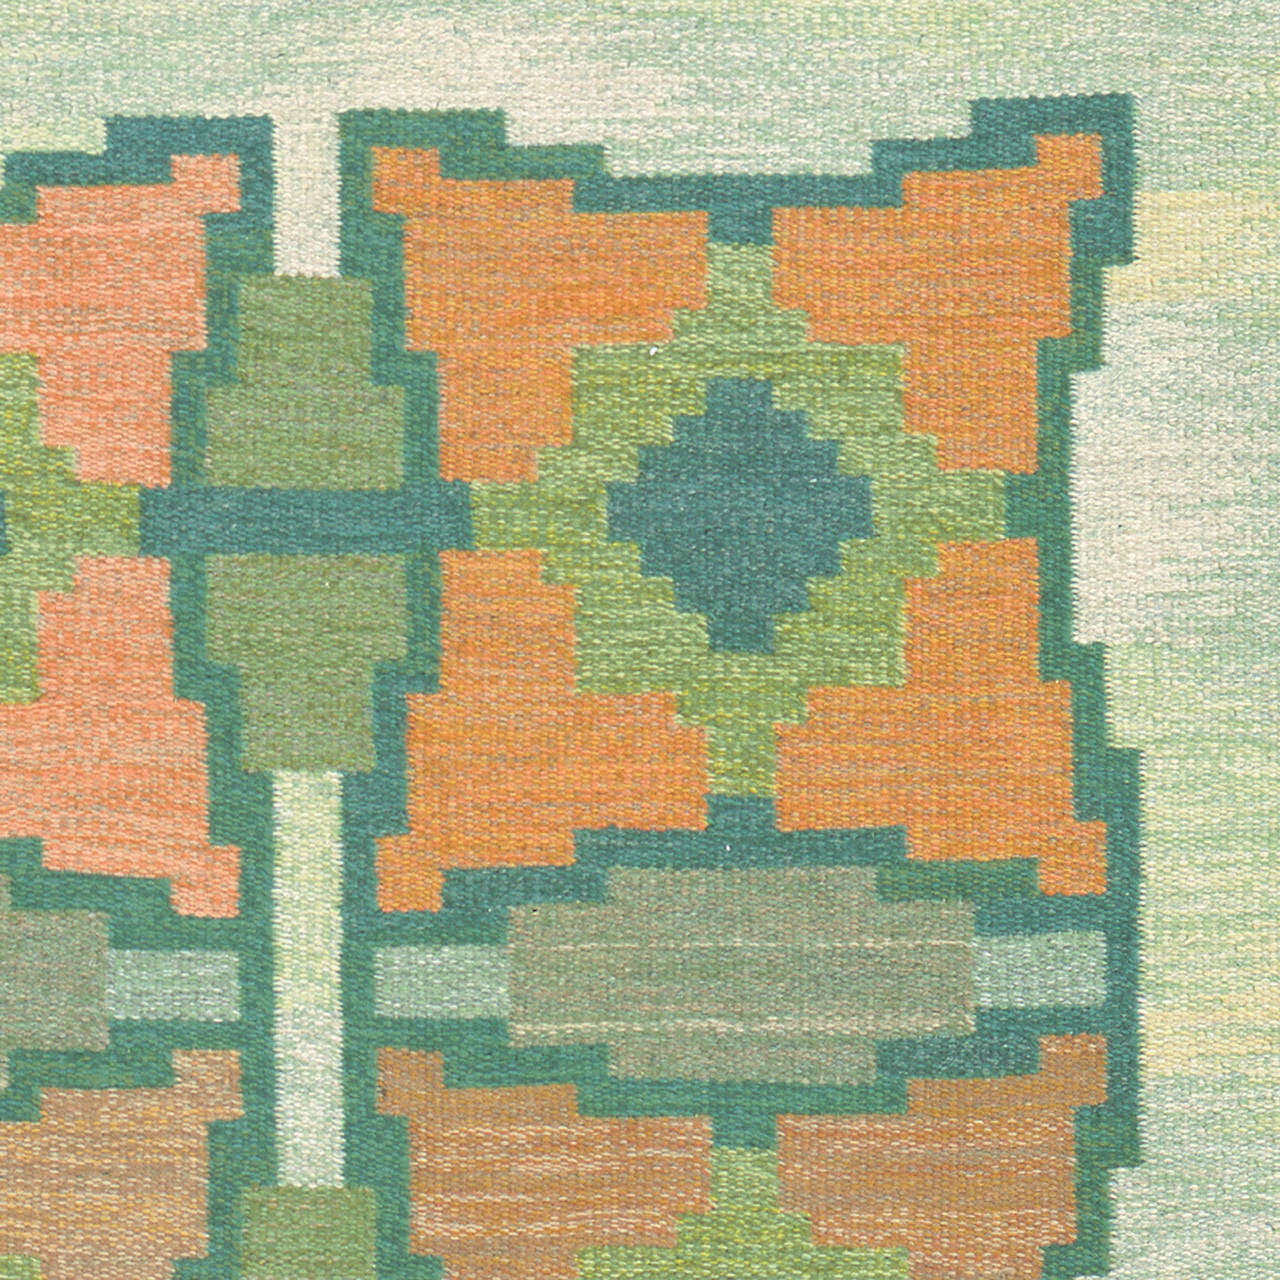 20th Century Swedish Flat-Weave Carpet
Sweden, circa 1950-1960
'PORS' design
Signed 'JJ' (Judith Johansson)